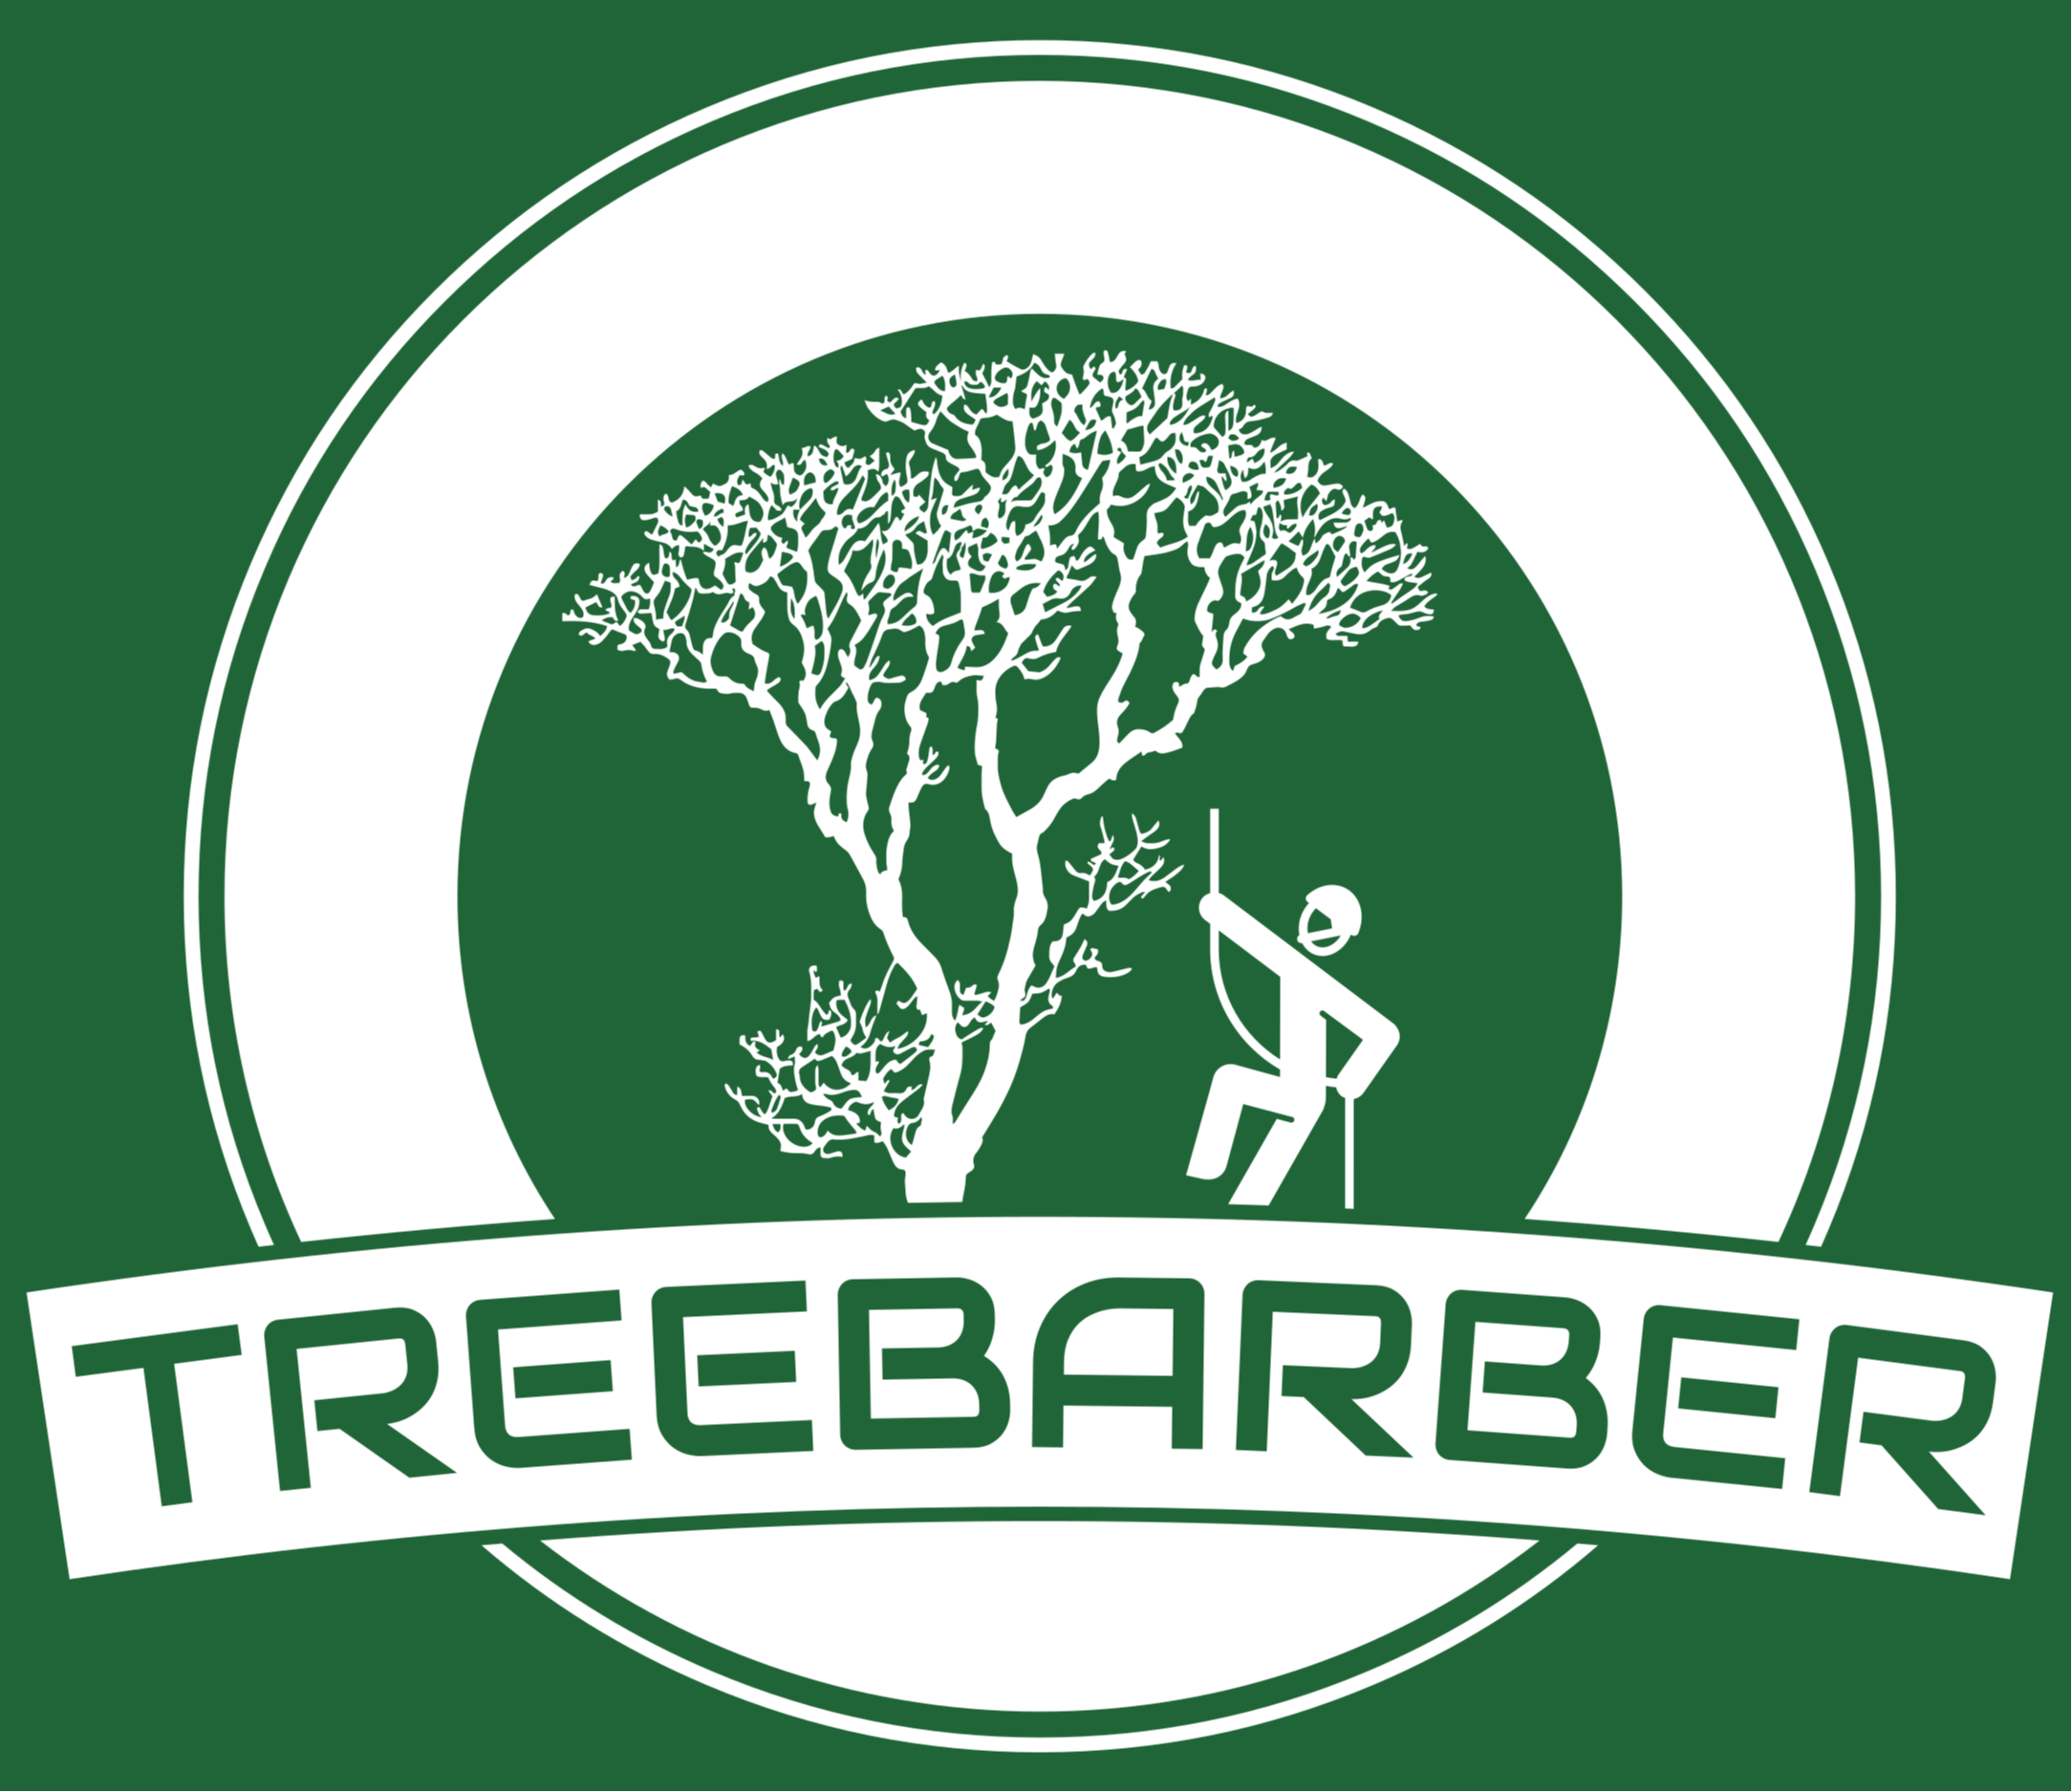 Treebarber